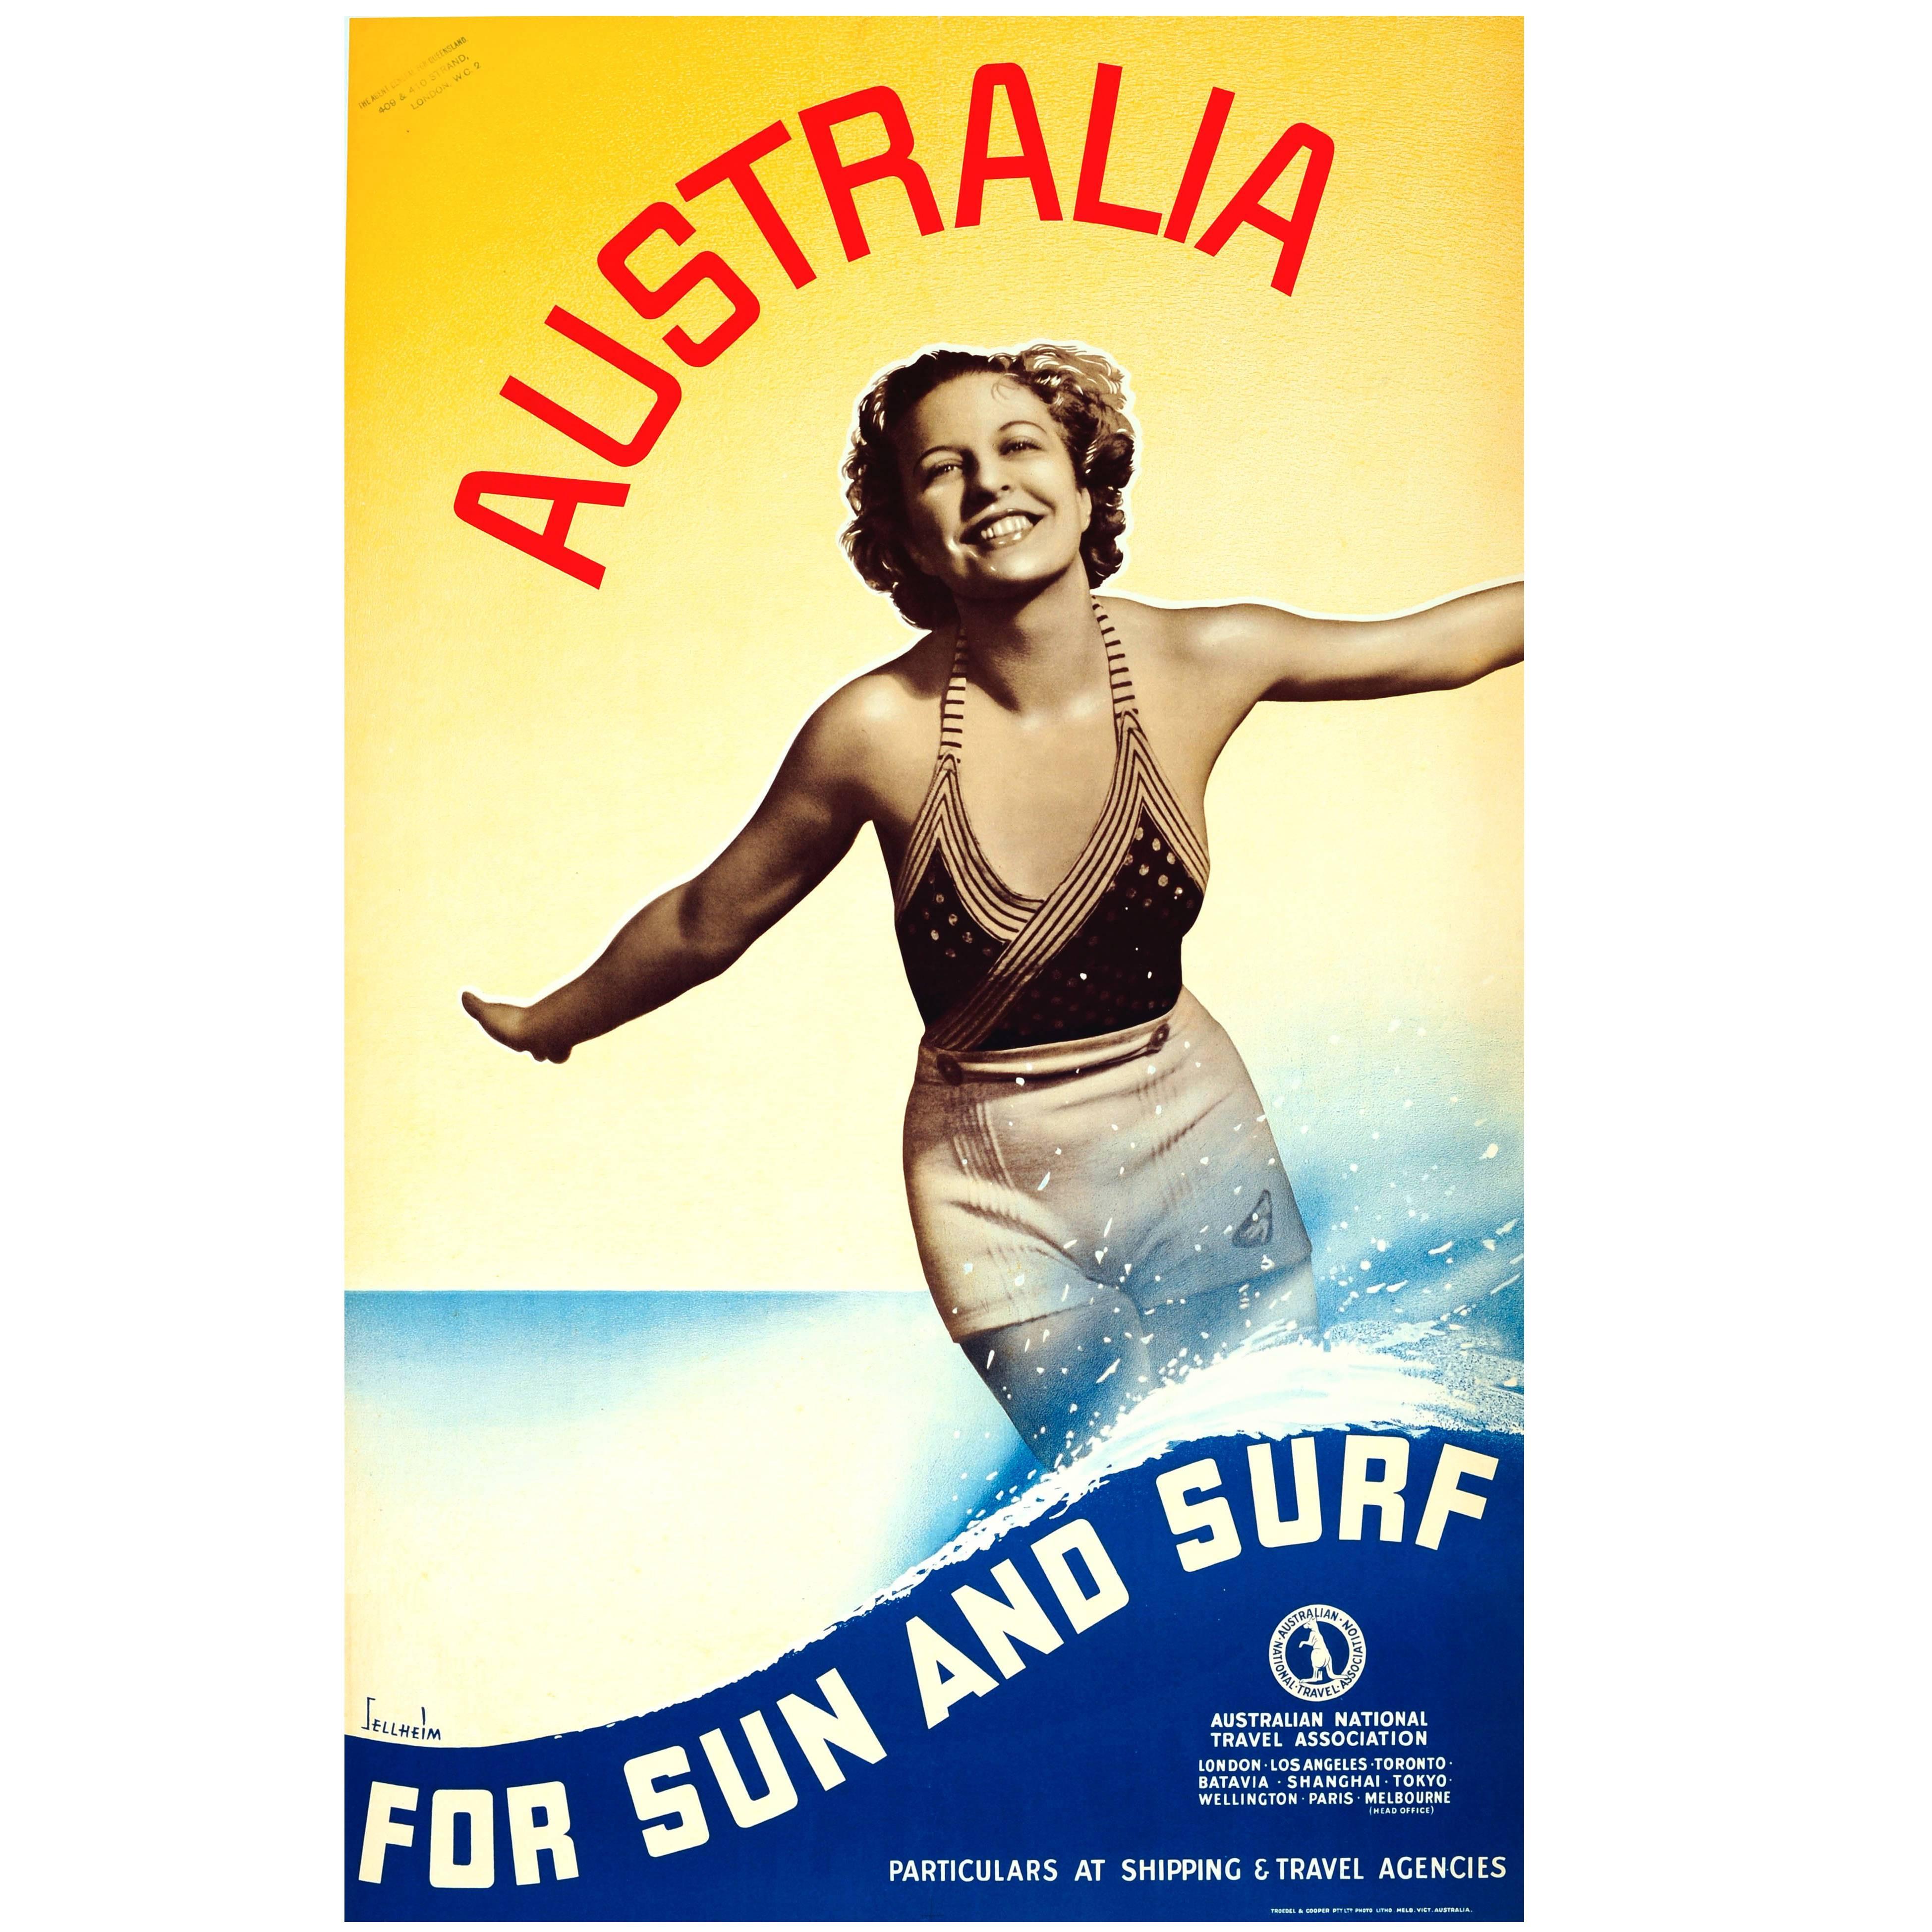 Original Vintage 1930s Travel Advertising Poster “Australia for Sun and Surf”